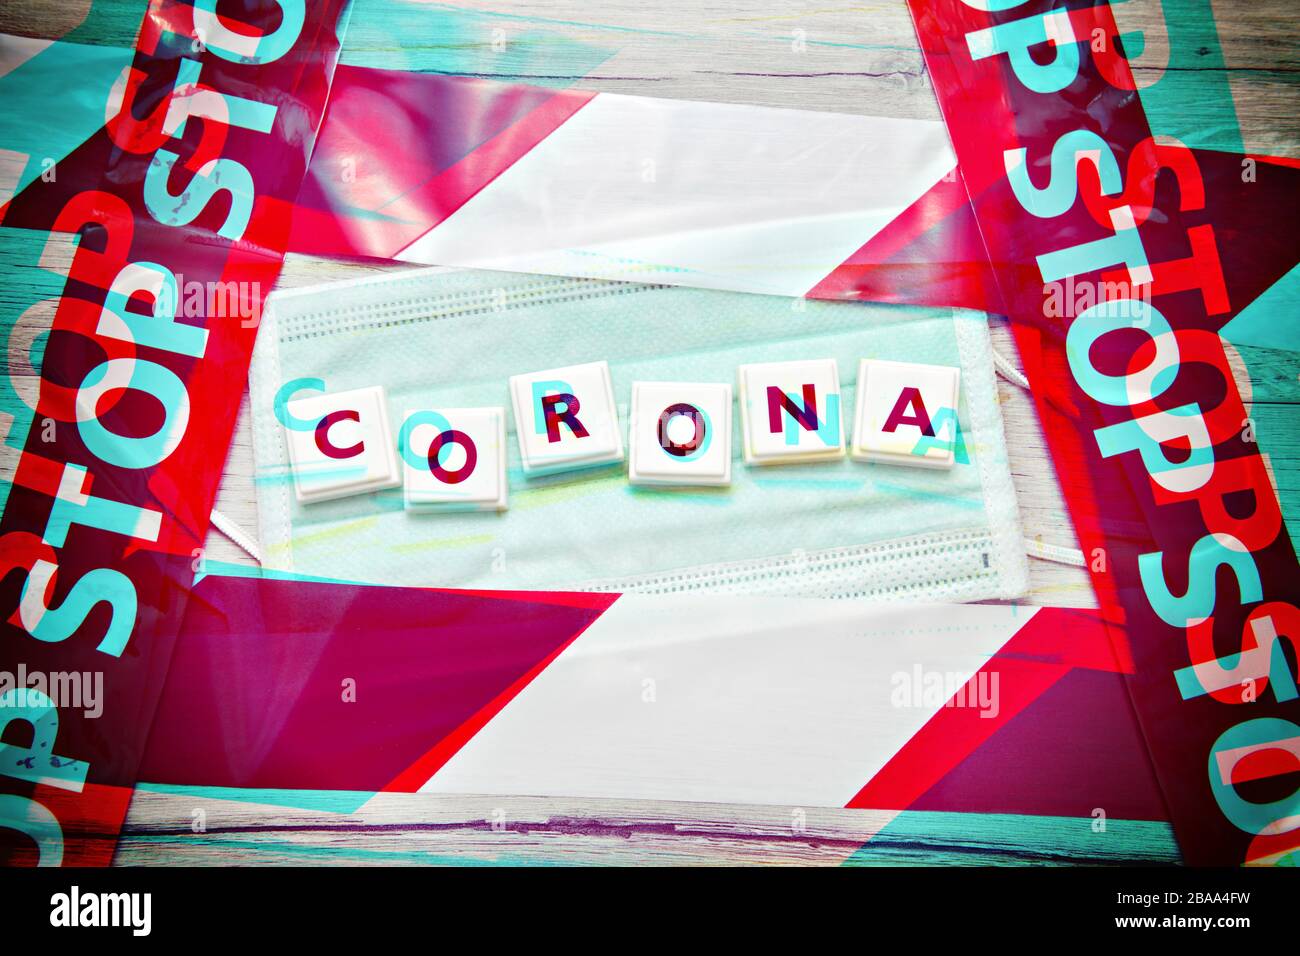 Corona golpe en máscara y detener la cinta, foto simbólica Coronavirus, Corona-Schriftzug auf Mundschutz und Absperrband, Symbolfoto Coronavirus Foto de stock